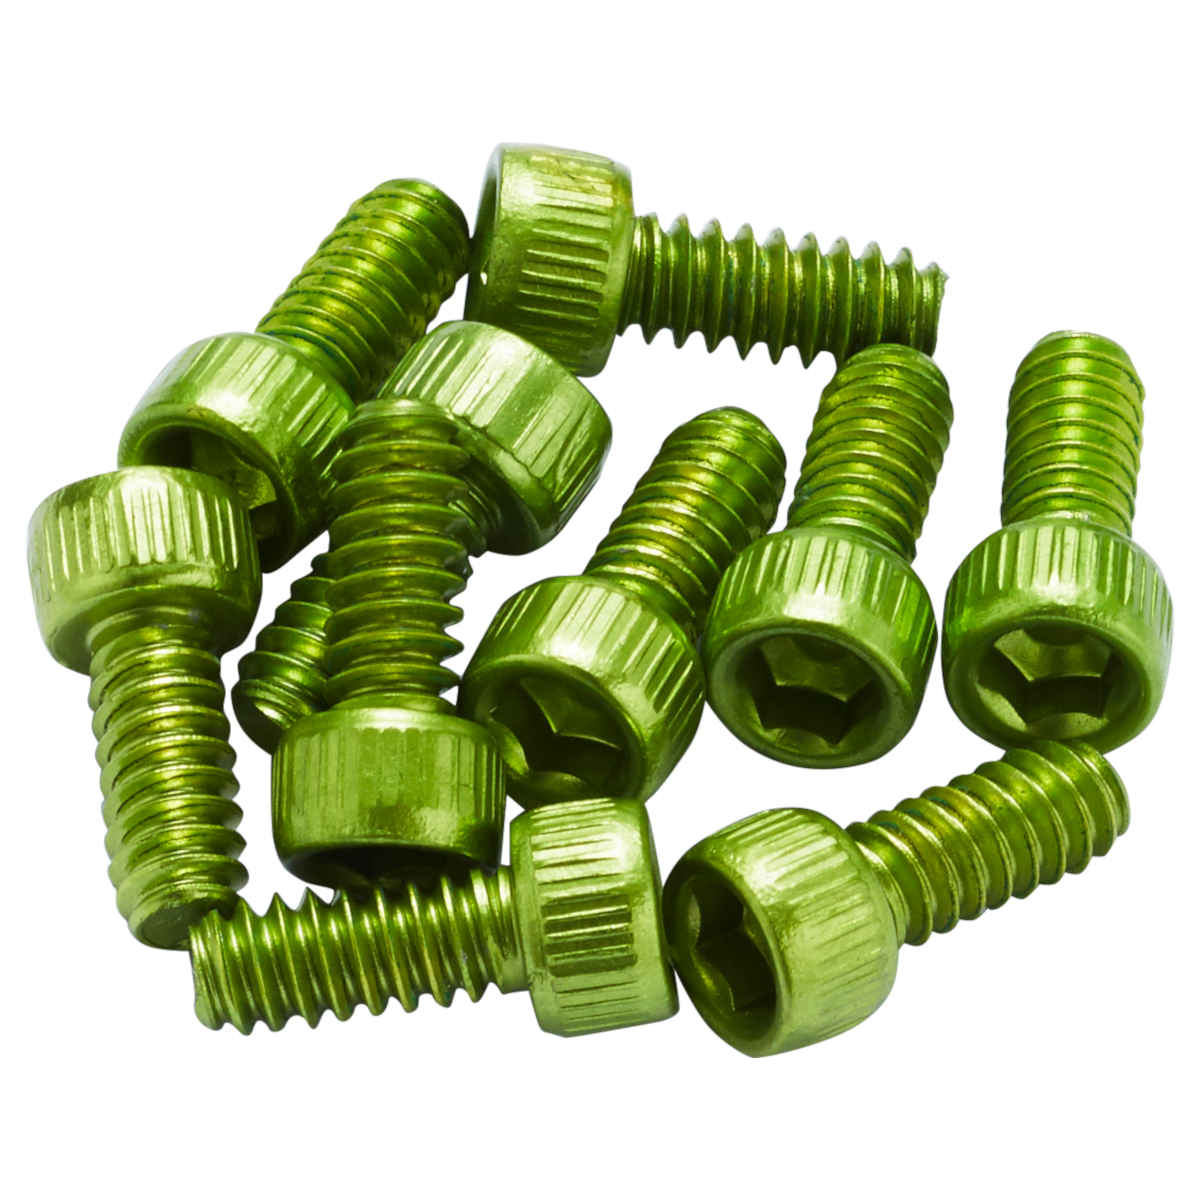 Productfoto van Reverse Components Aluminium Pedal Pins for Escape Pro &amp; Black ONE - light green